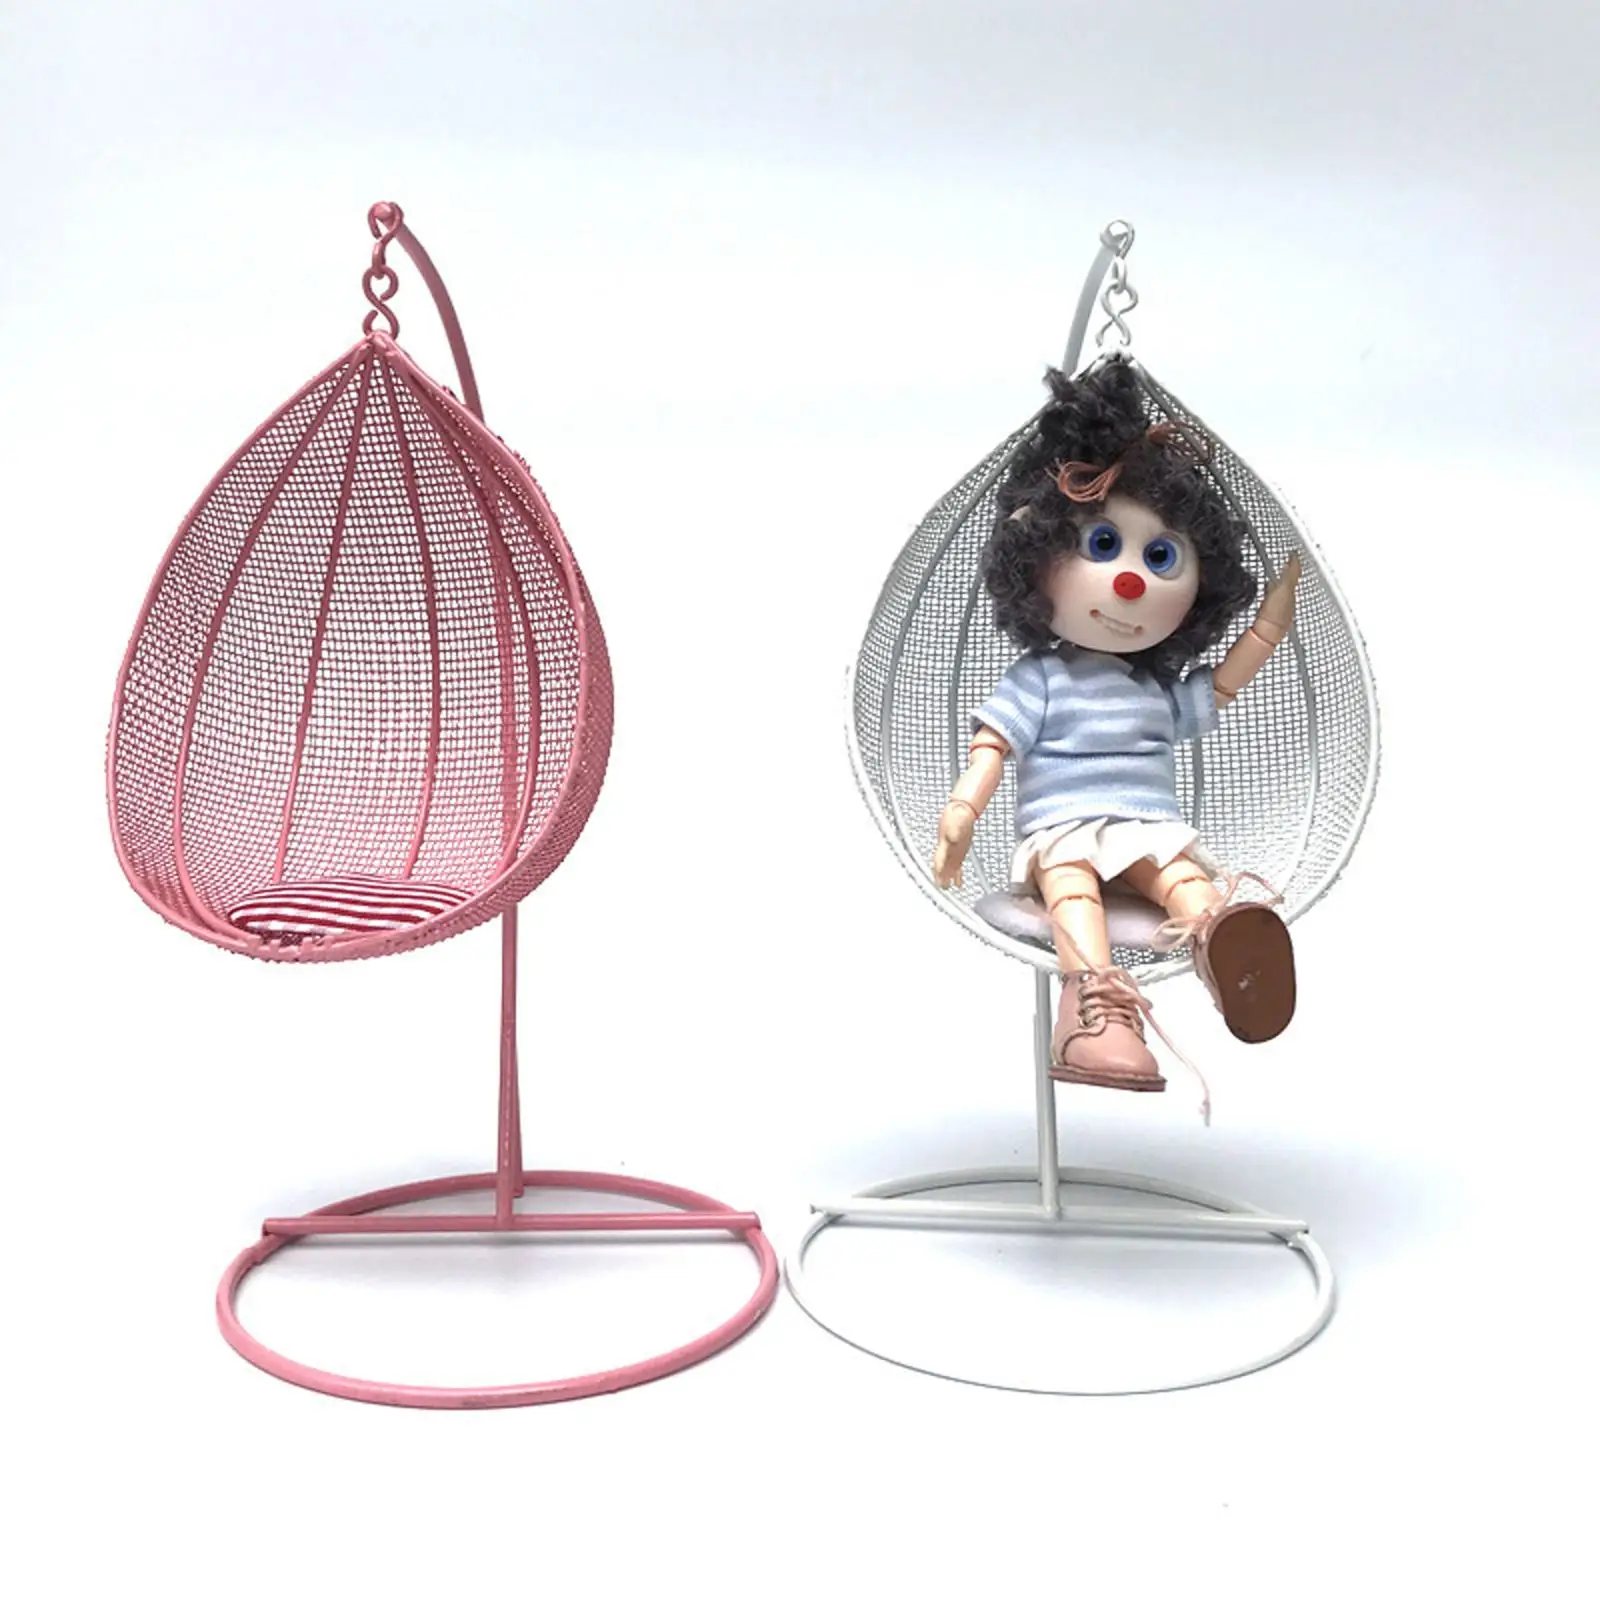 1/12 Scale Dollhouse Iron Metal Miniature Furniture Swing Chair Hammock Fittings